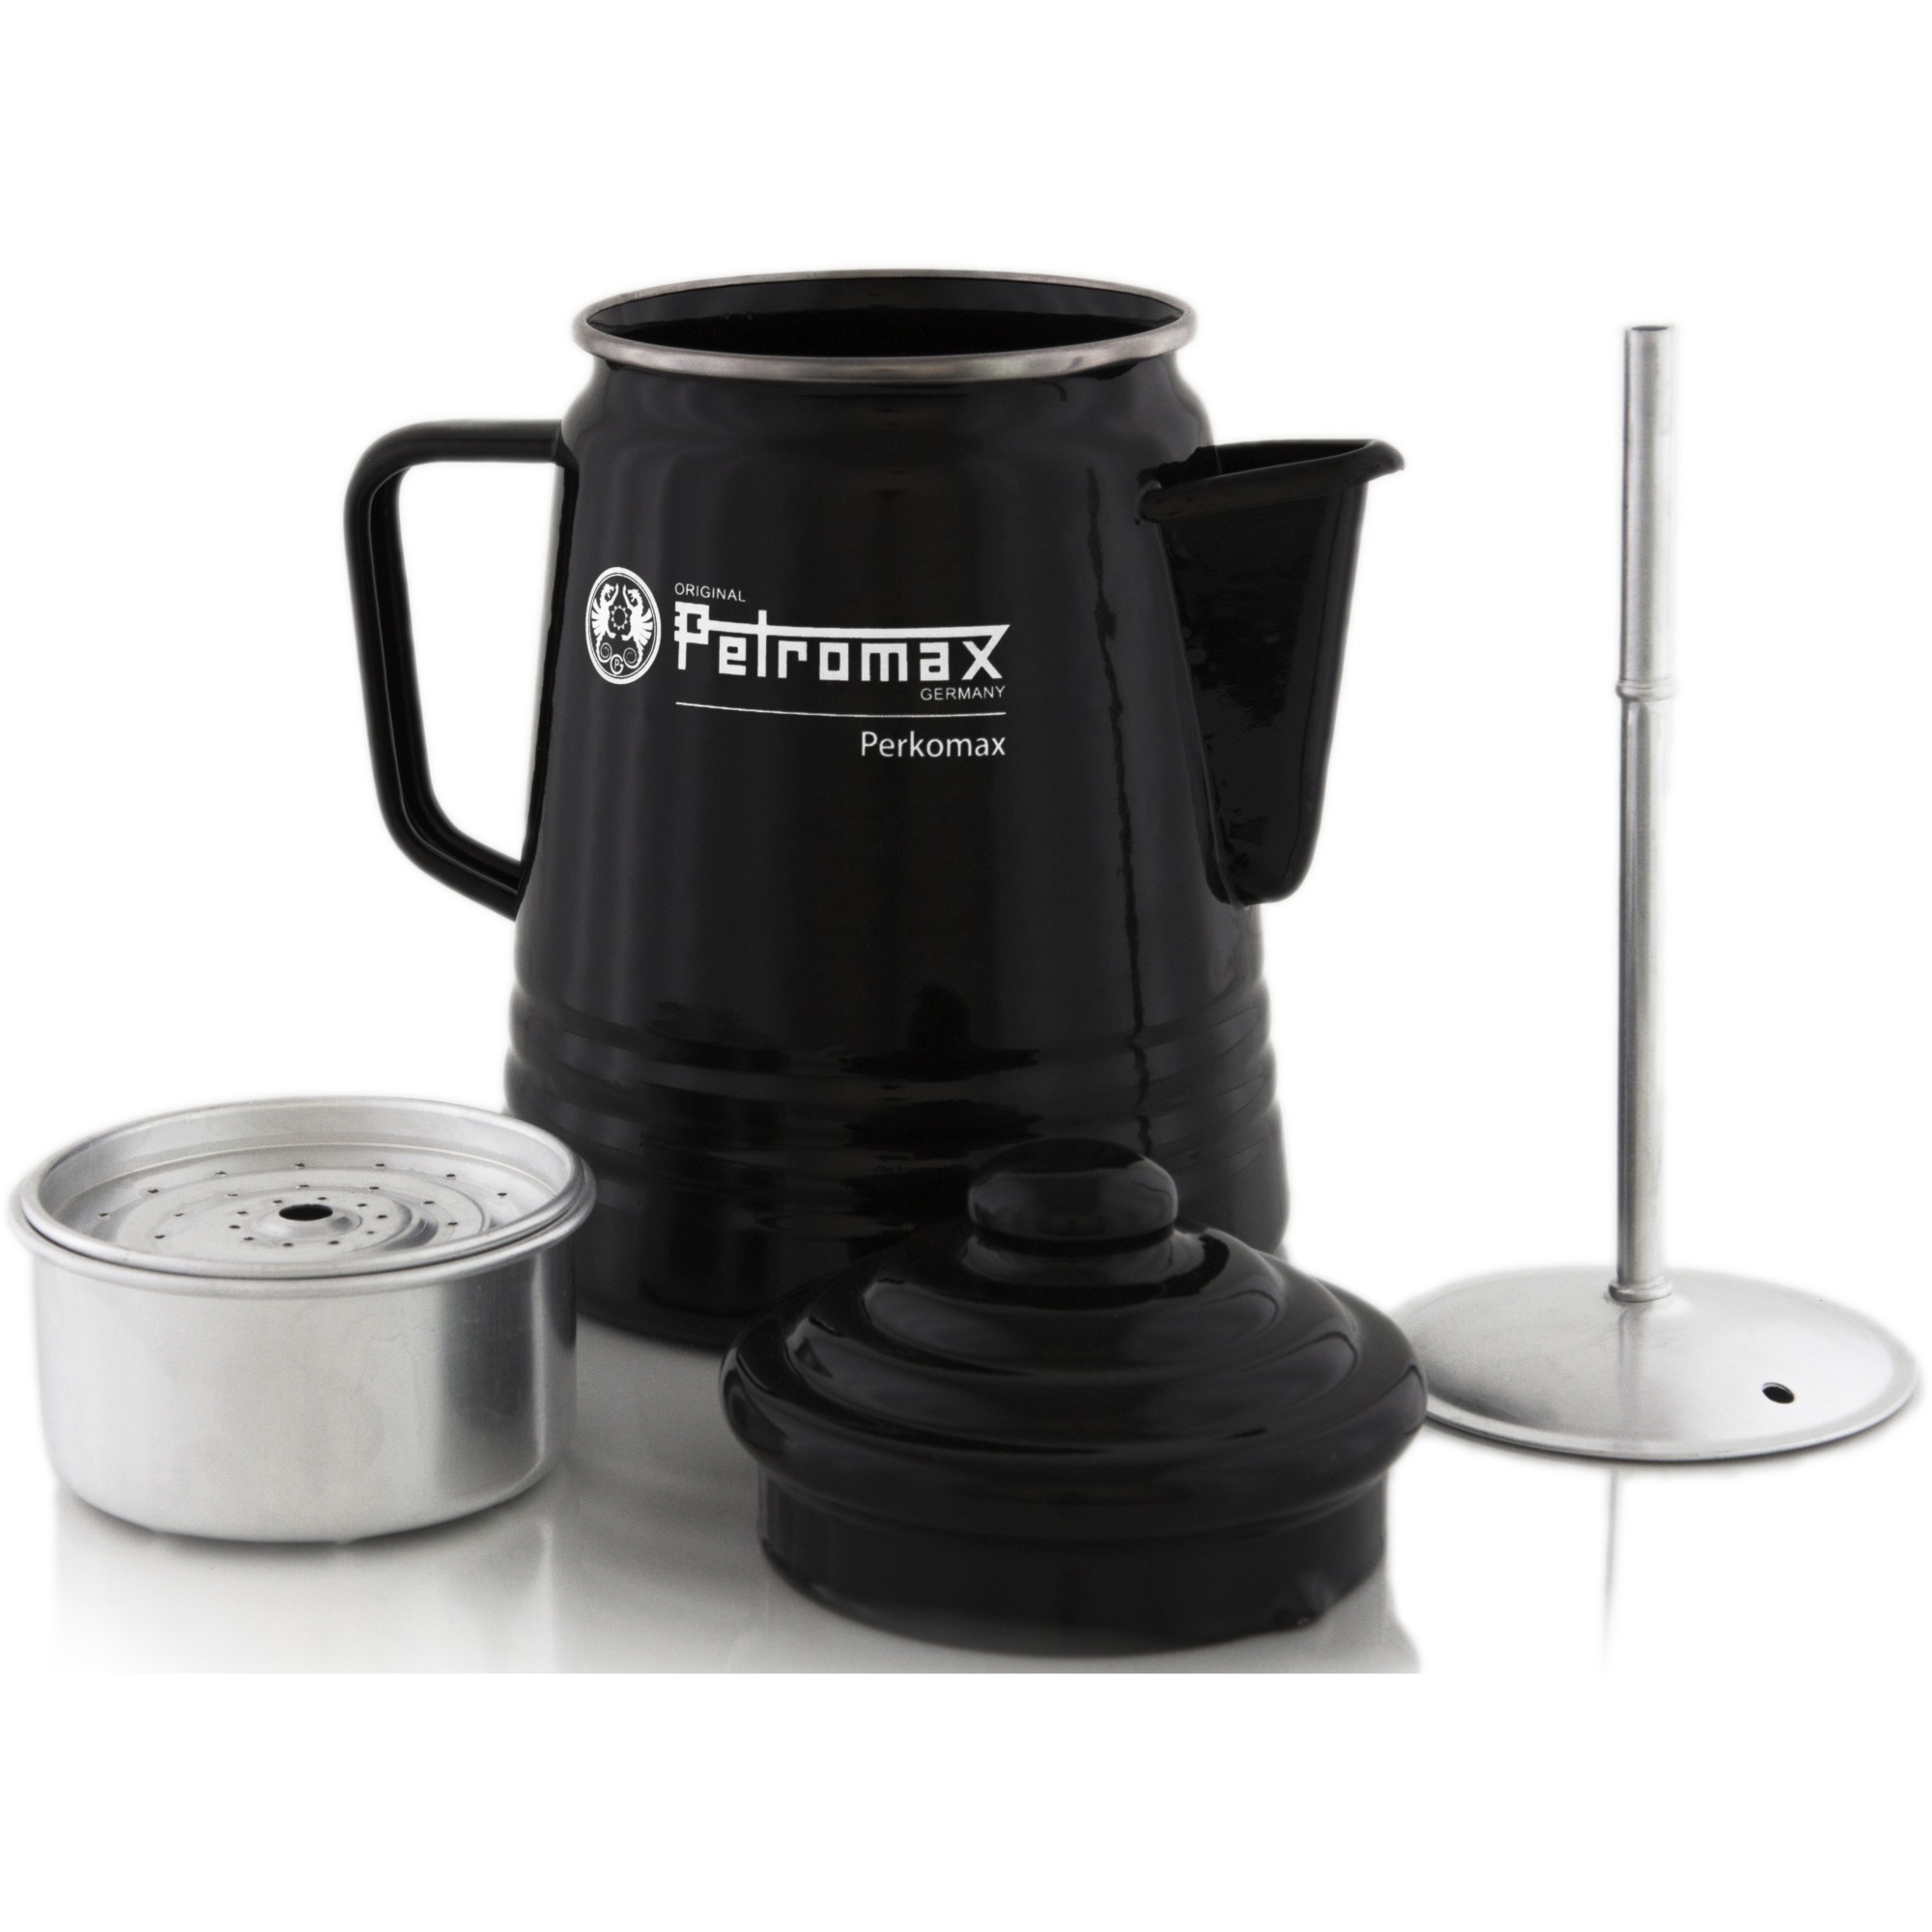 Image of Alternate - Perkomax Perkolator per-9-s, Kaffeebereiter online einkaufen bei Alternate